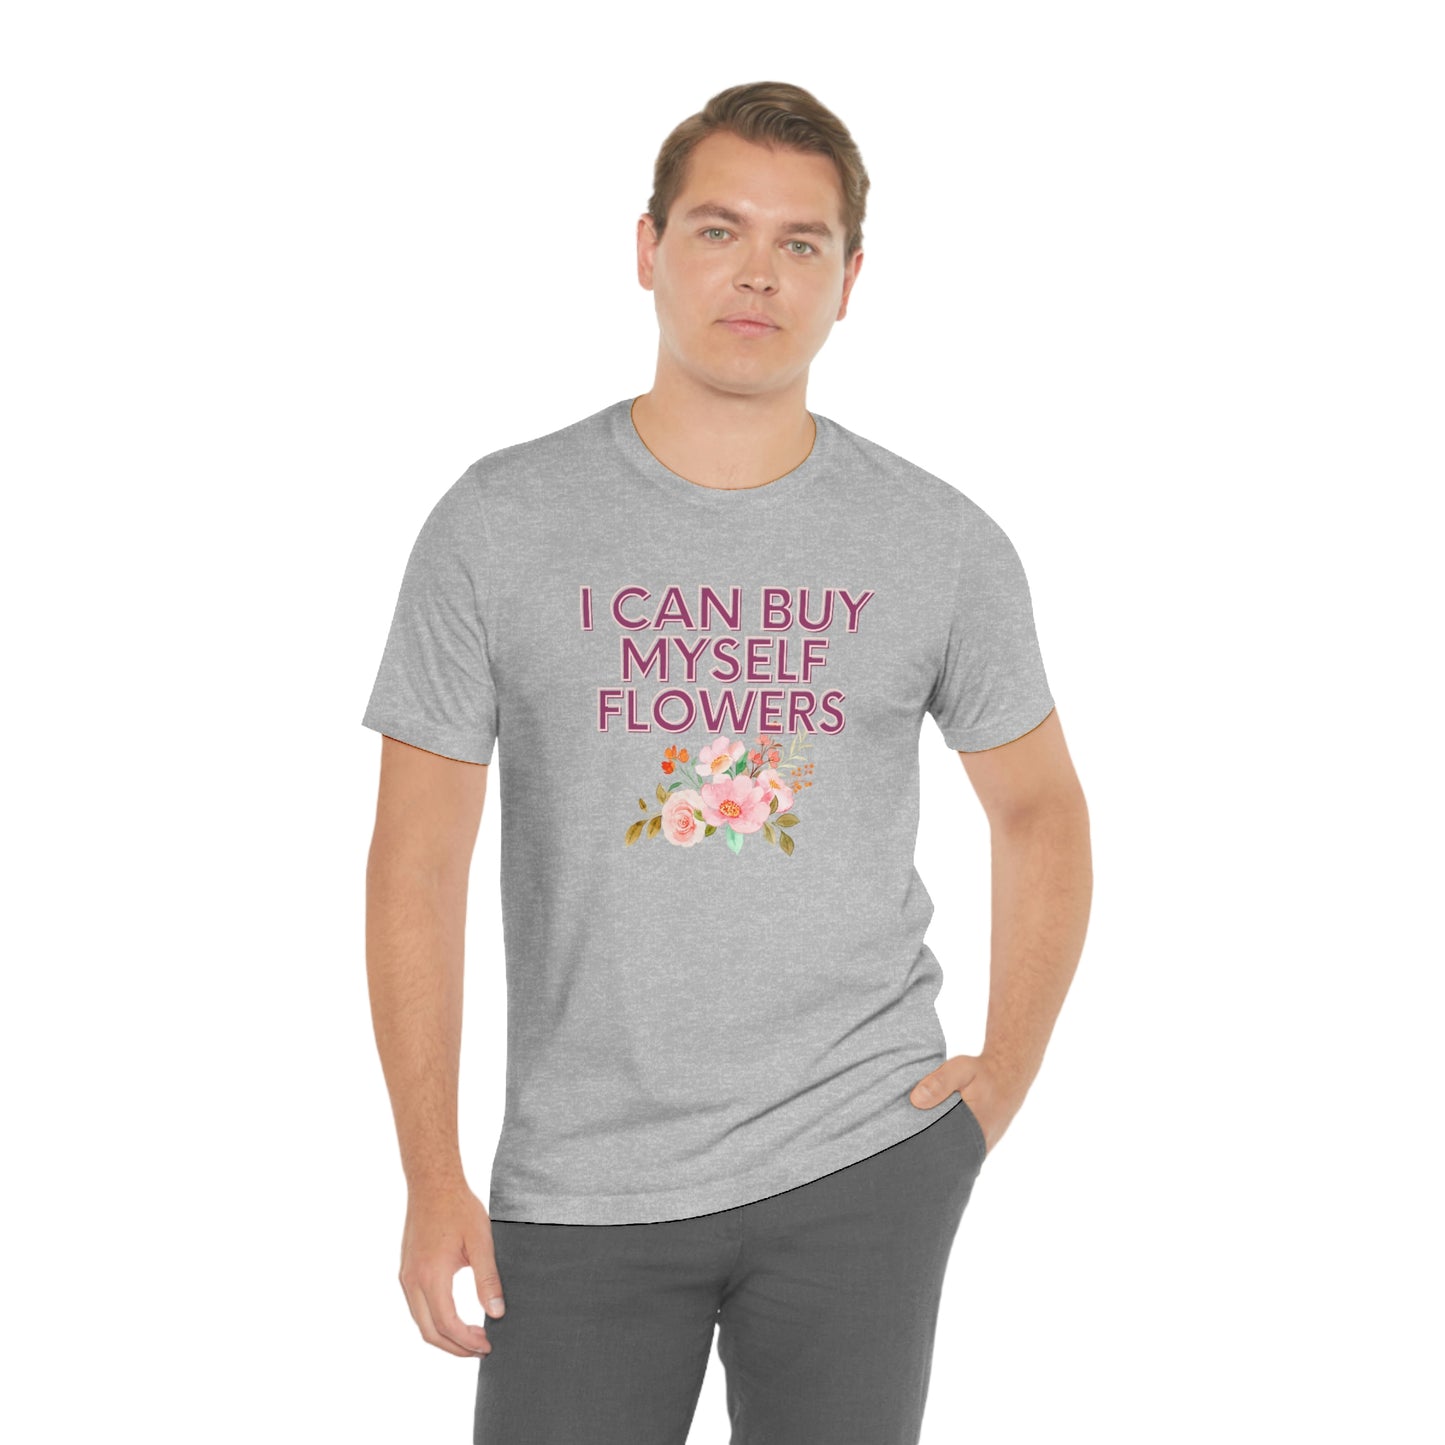 I can buy myself flowers shirt Short Sleeve Tee Miley Cyrus Flowers